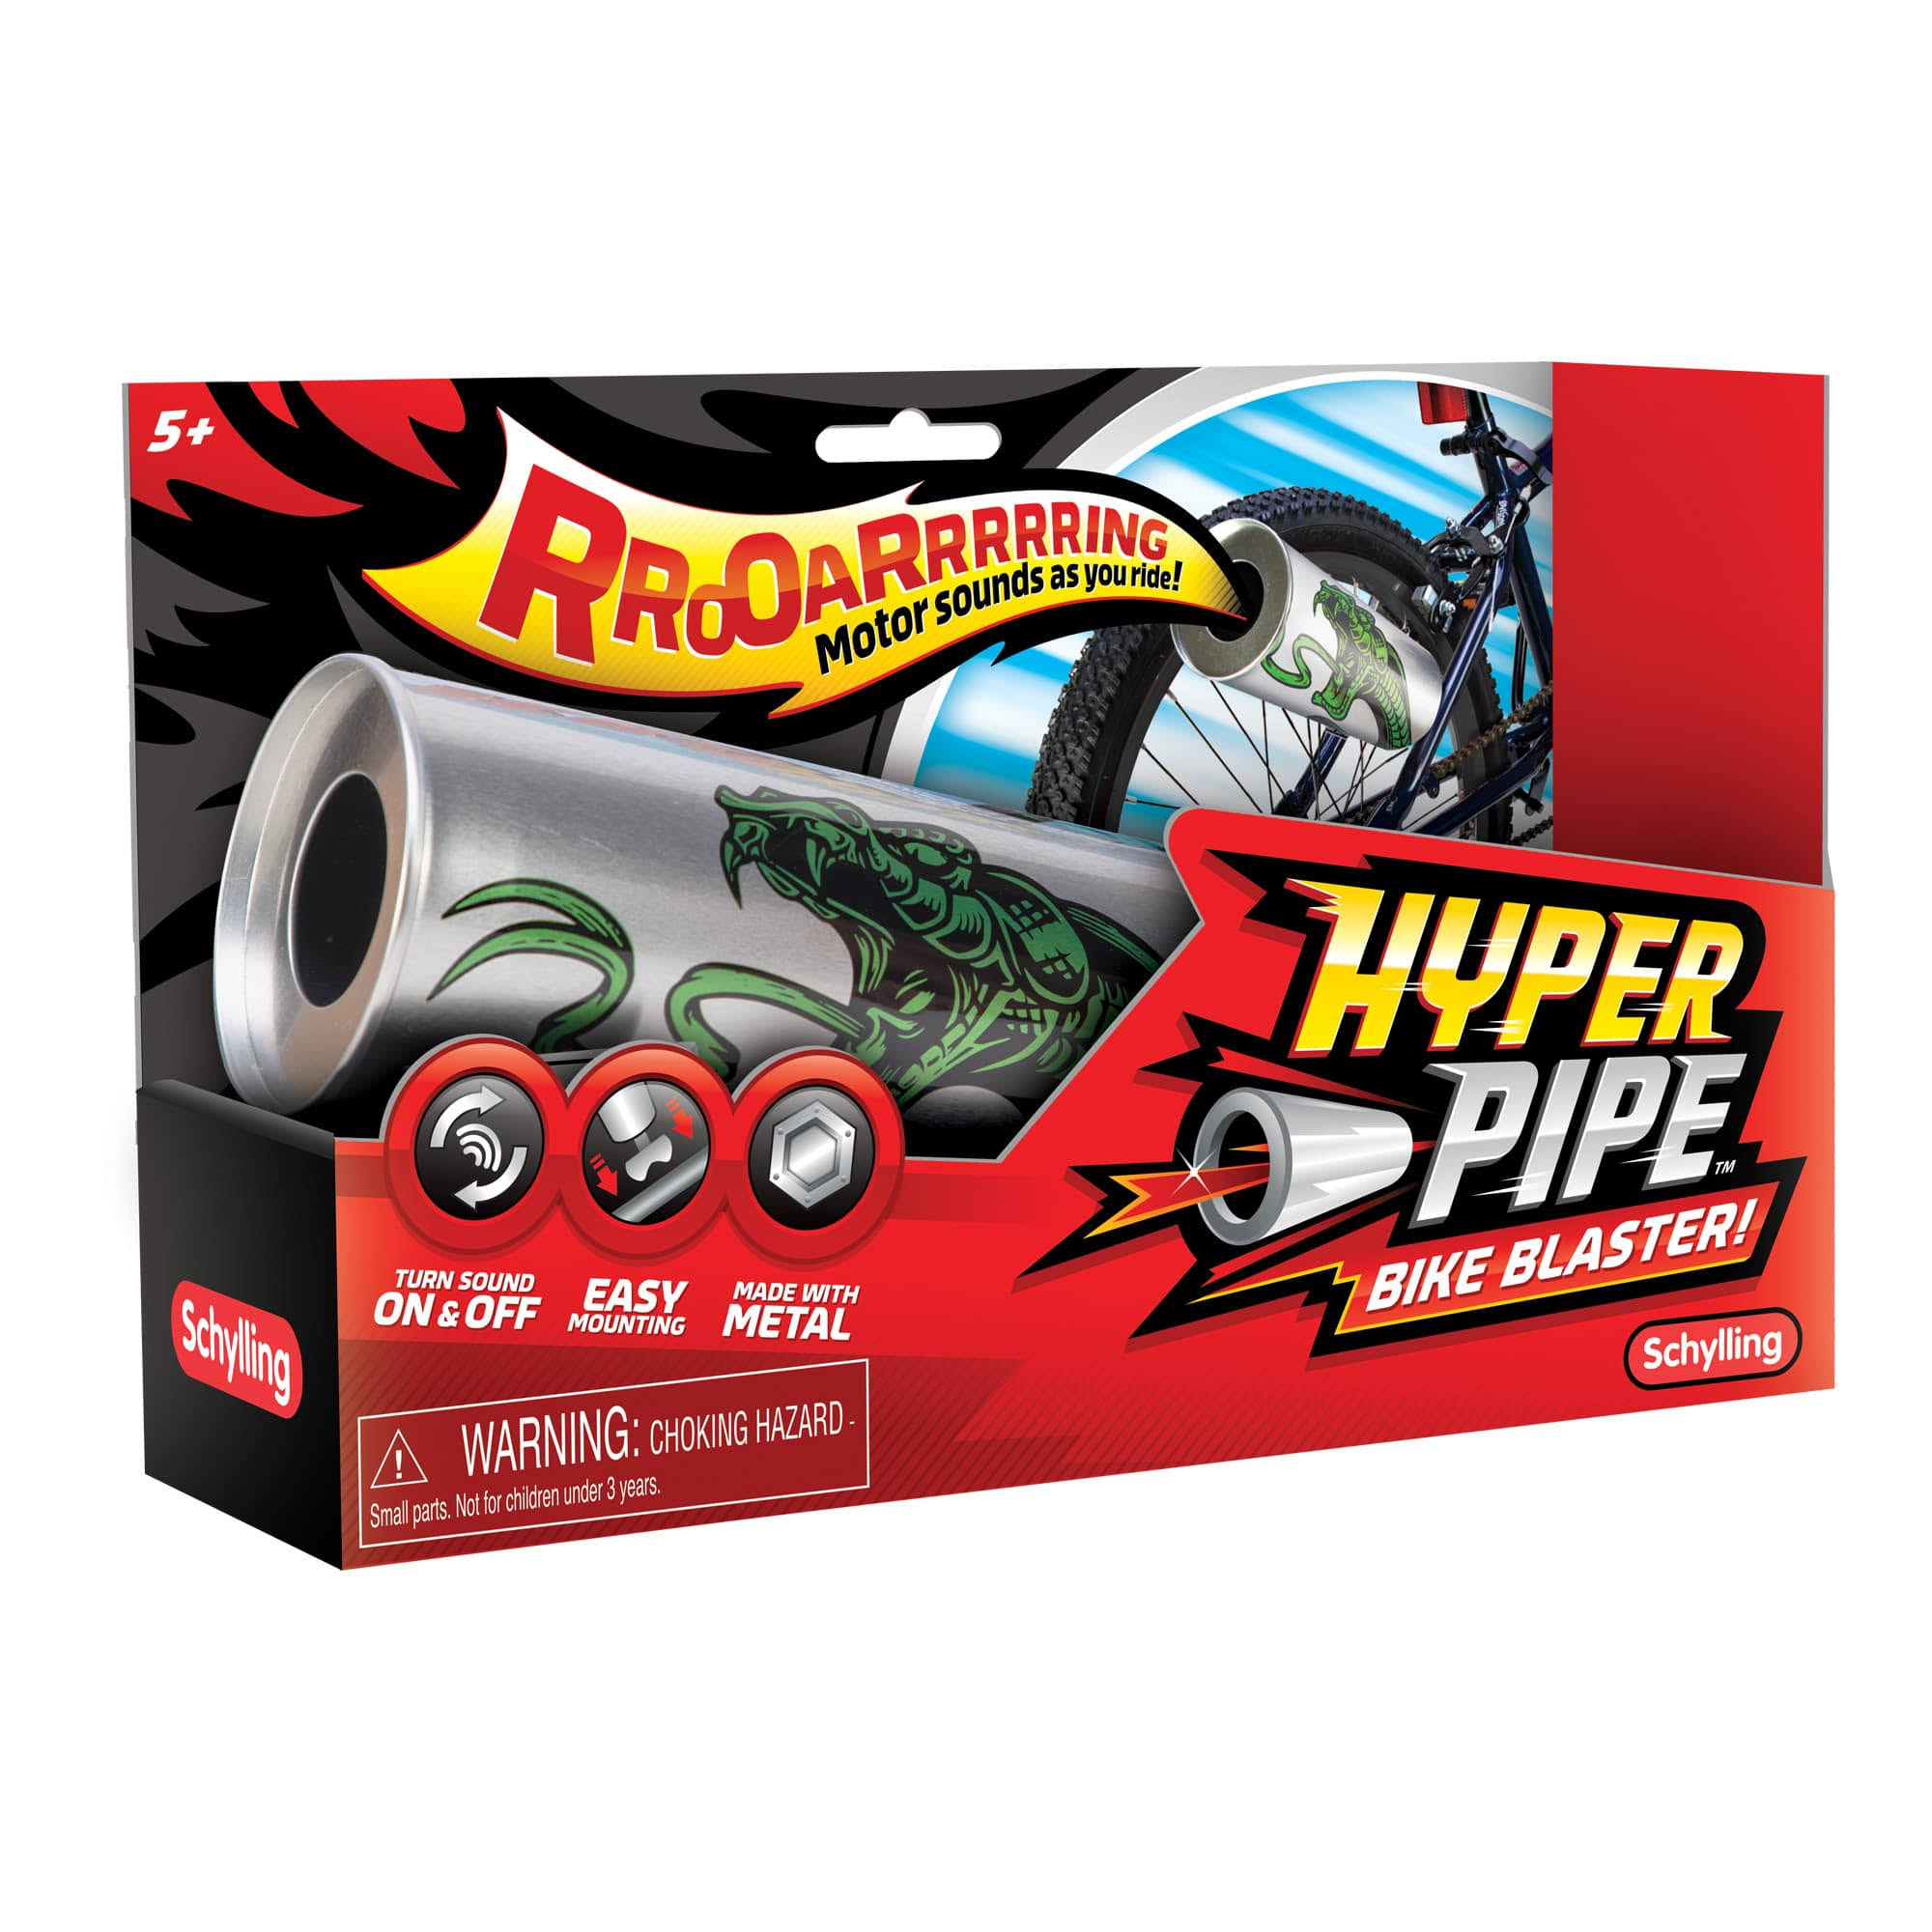 Schylling Hyper Pipe Bike Blaster